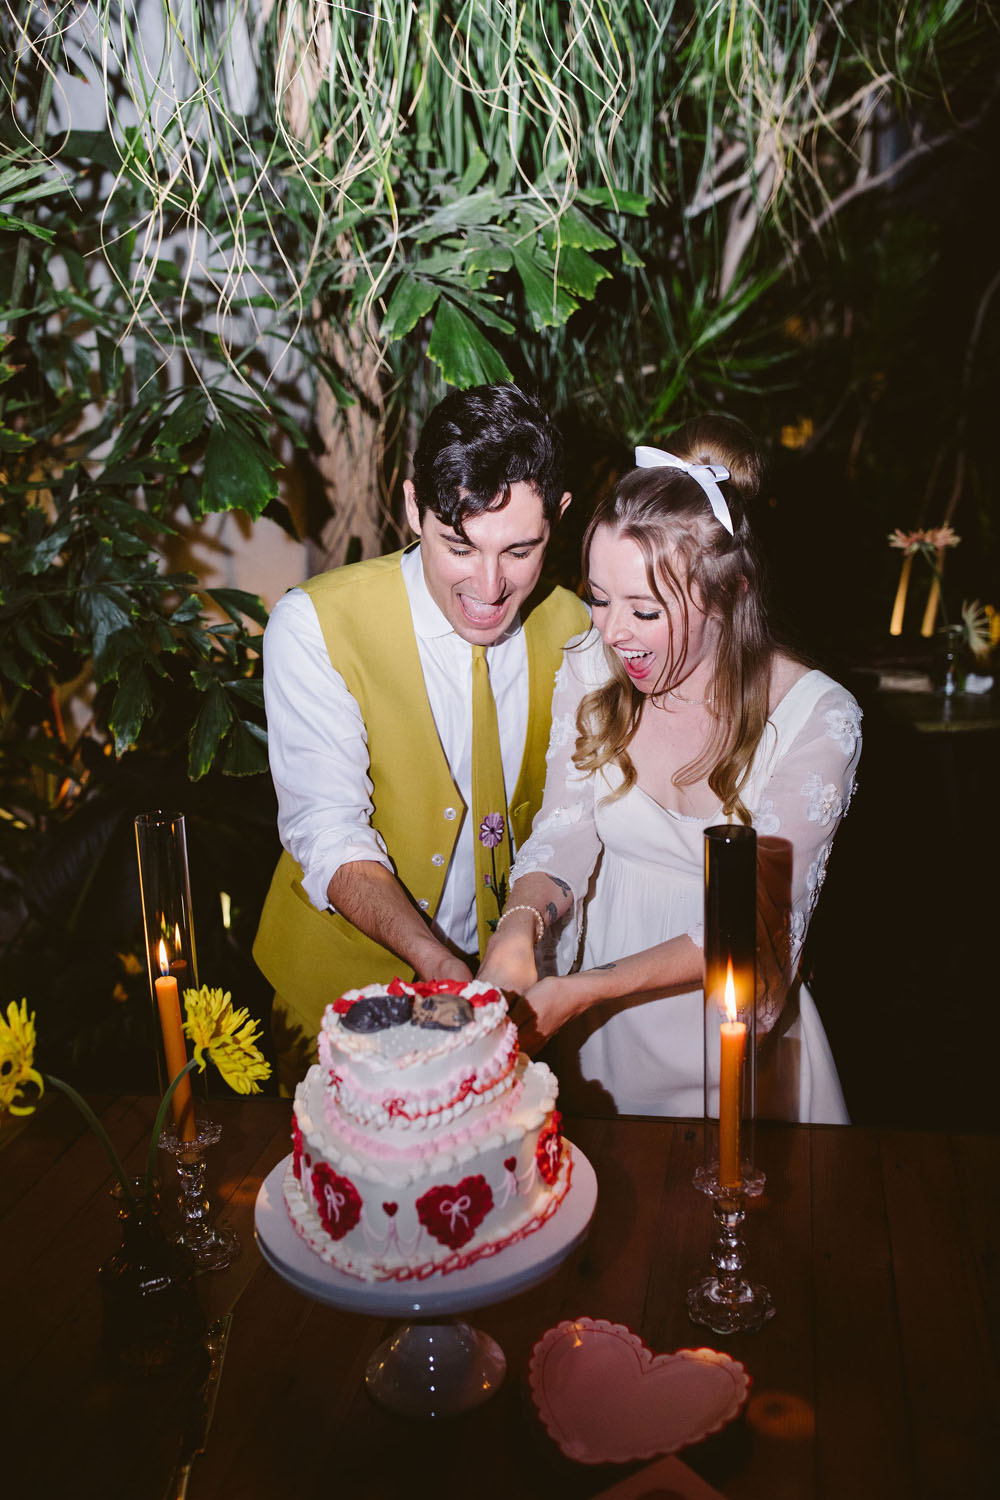 heart cake cutting at 1960s themed retro wedding